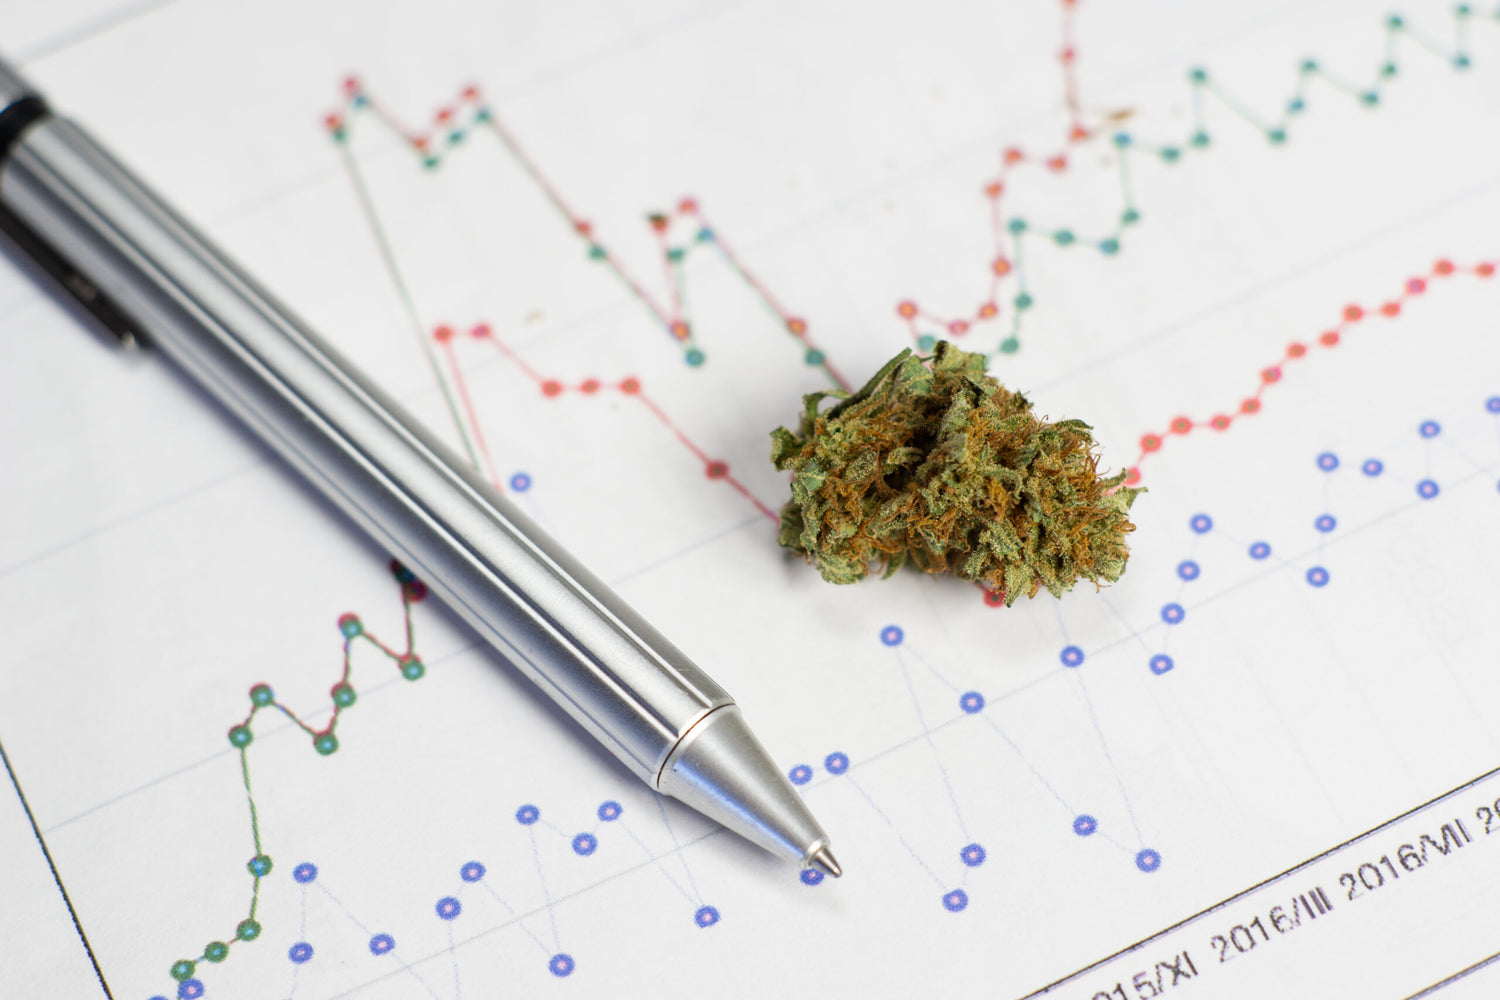 Cannabis Investors Suffer Stock Market Losses Despite Continued Growth